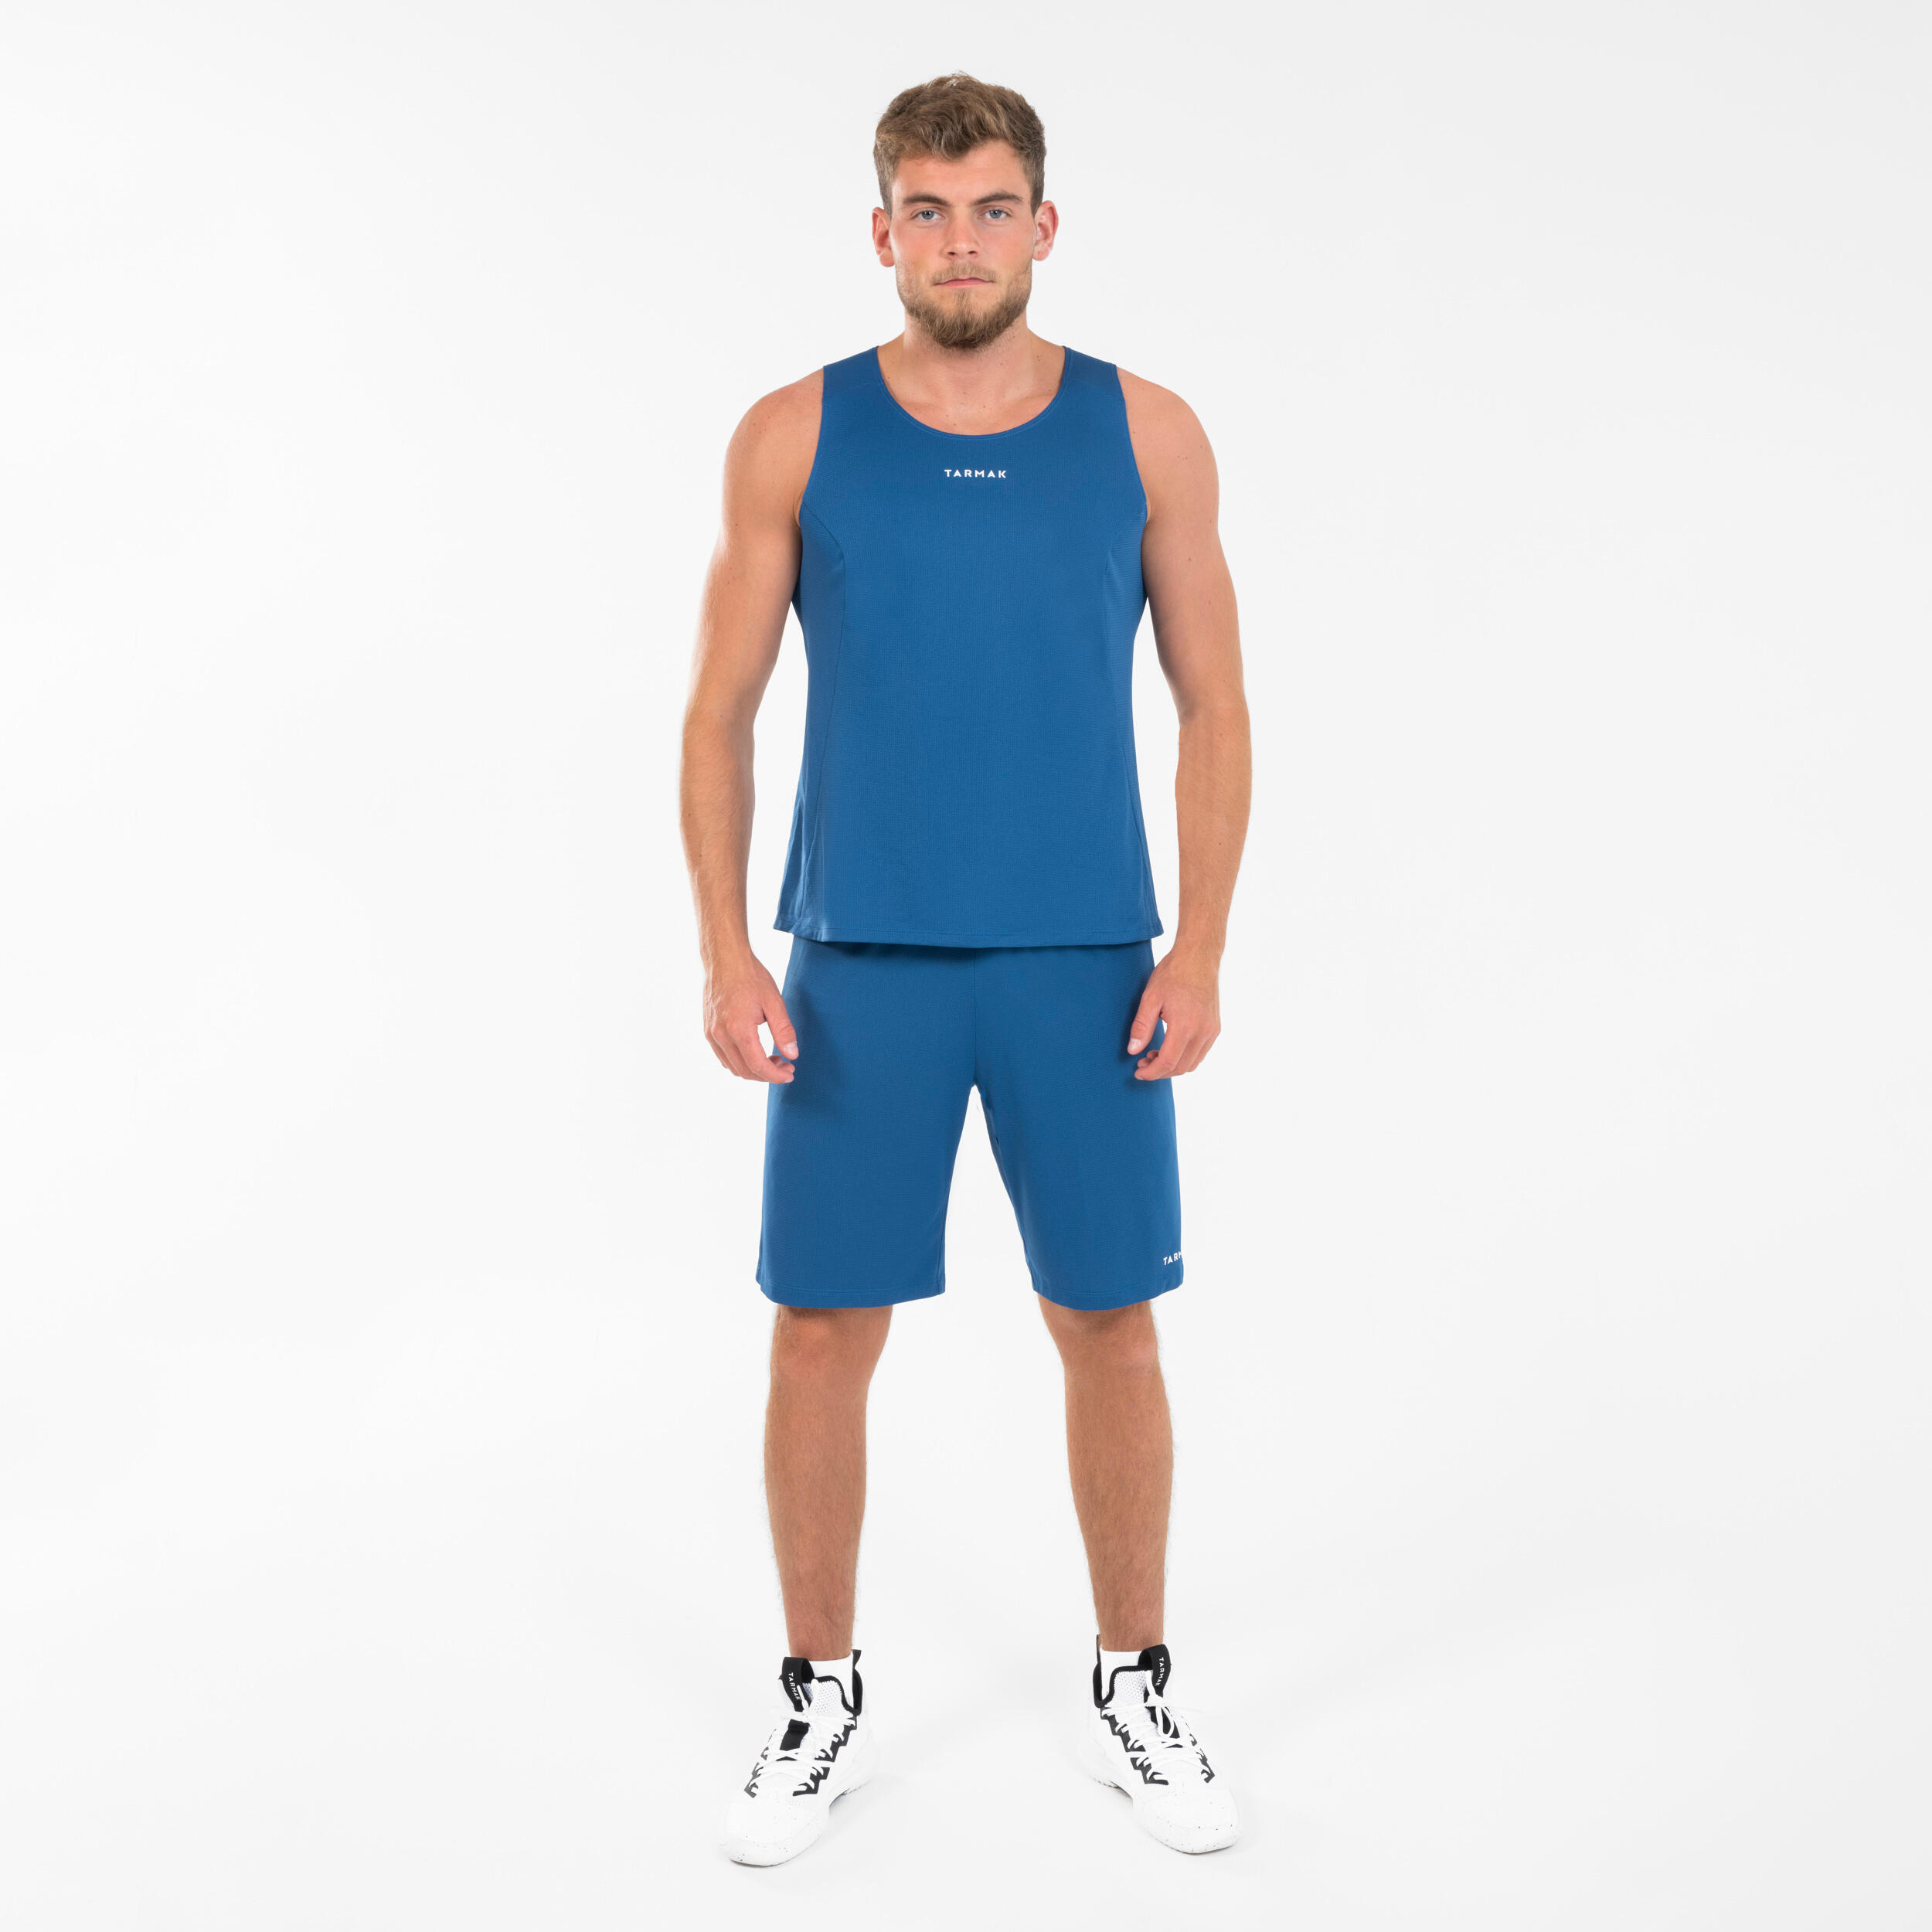 Men's Basketball Shorts - SH100 Blue - TARMAK